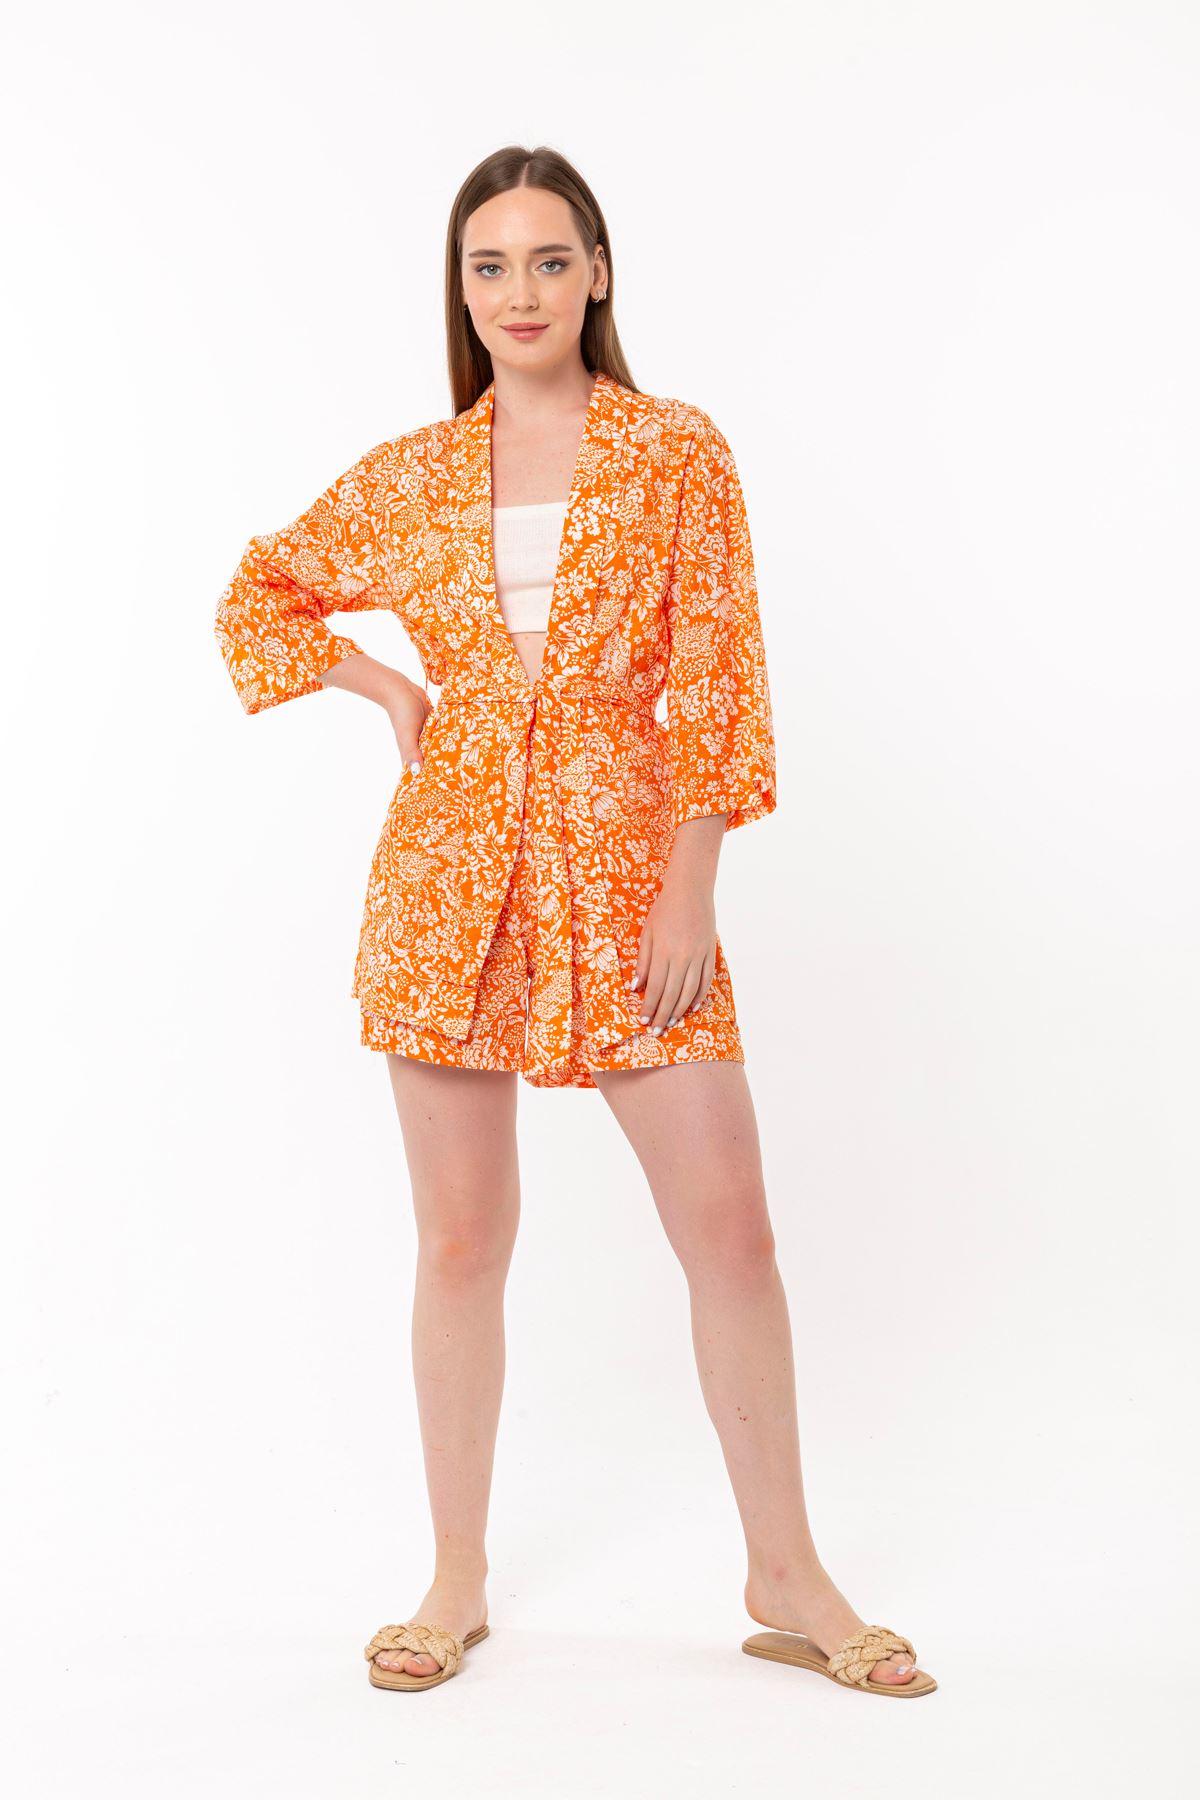 Vual Fabric Shawl Collar Floral Print Kimono Women'S Set - Orange